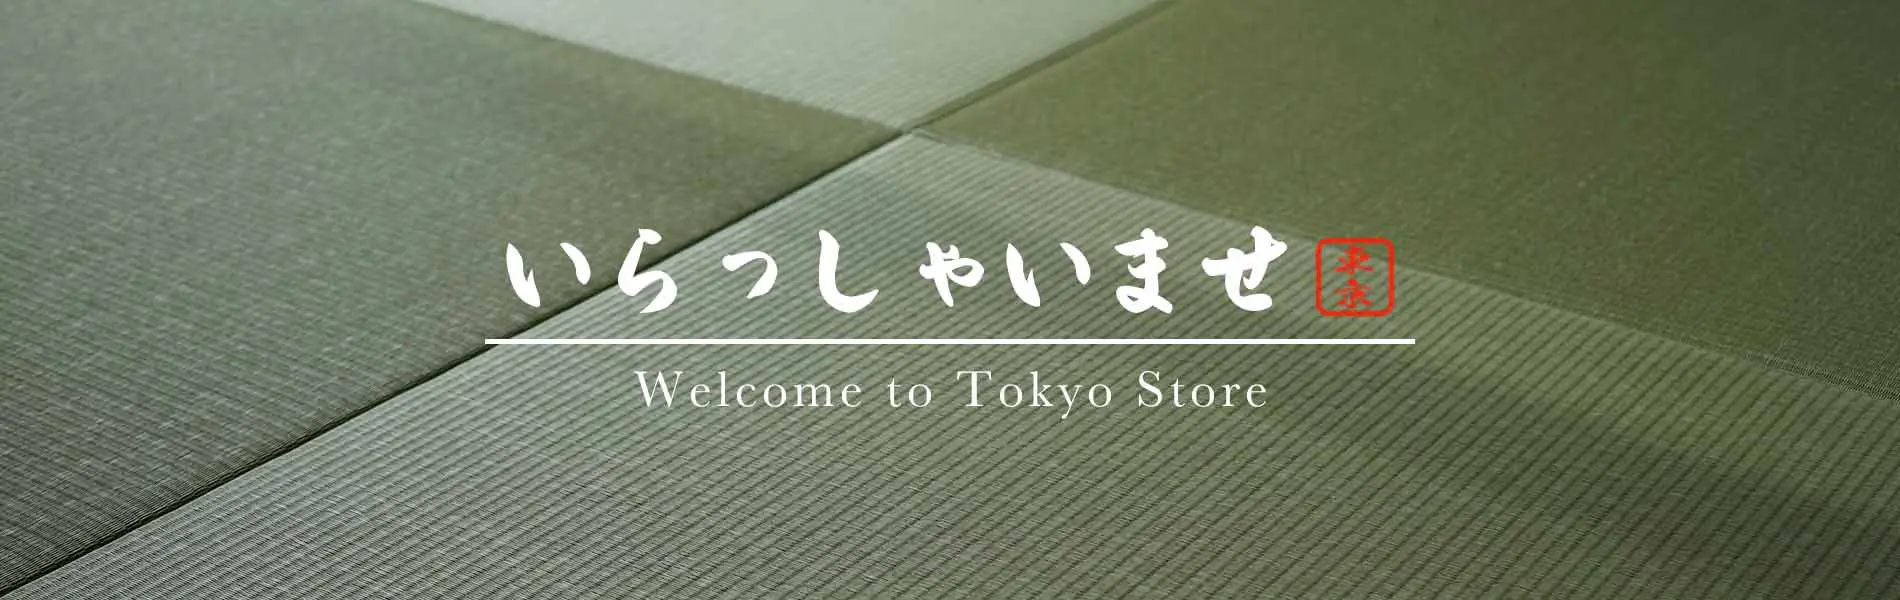 Tokyo Store | Tatami Store from Japan